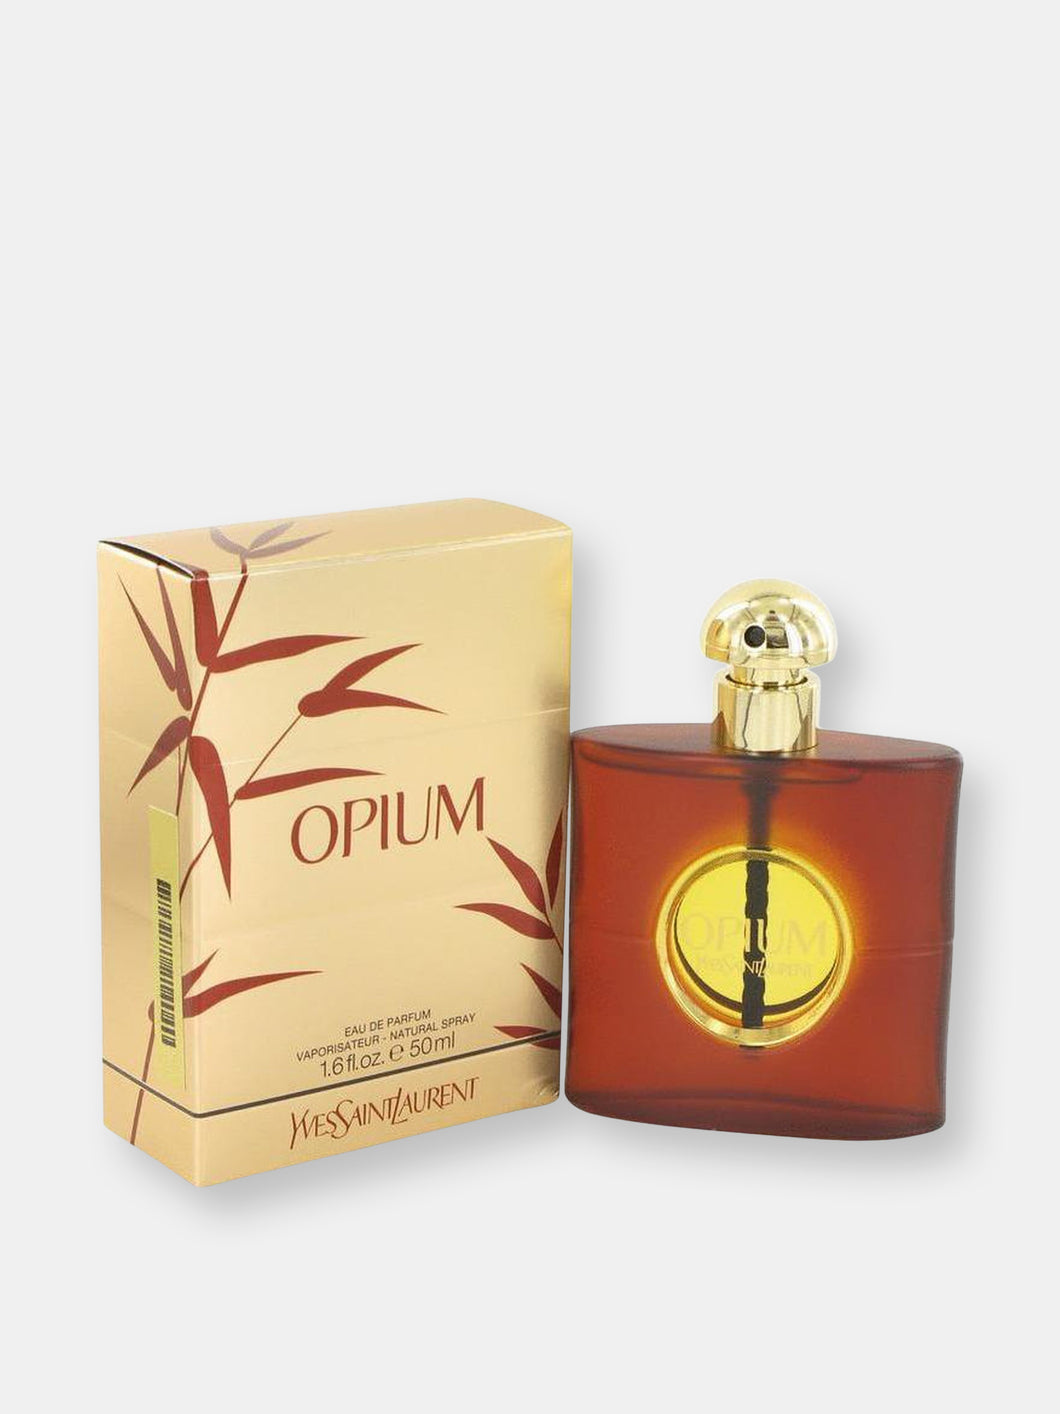 OPIUM by Yves Saint Laurent Eau De Parfum Spray (New Packaging) 1.6 oz